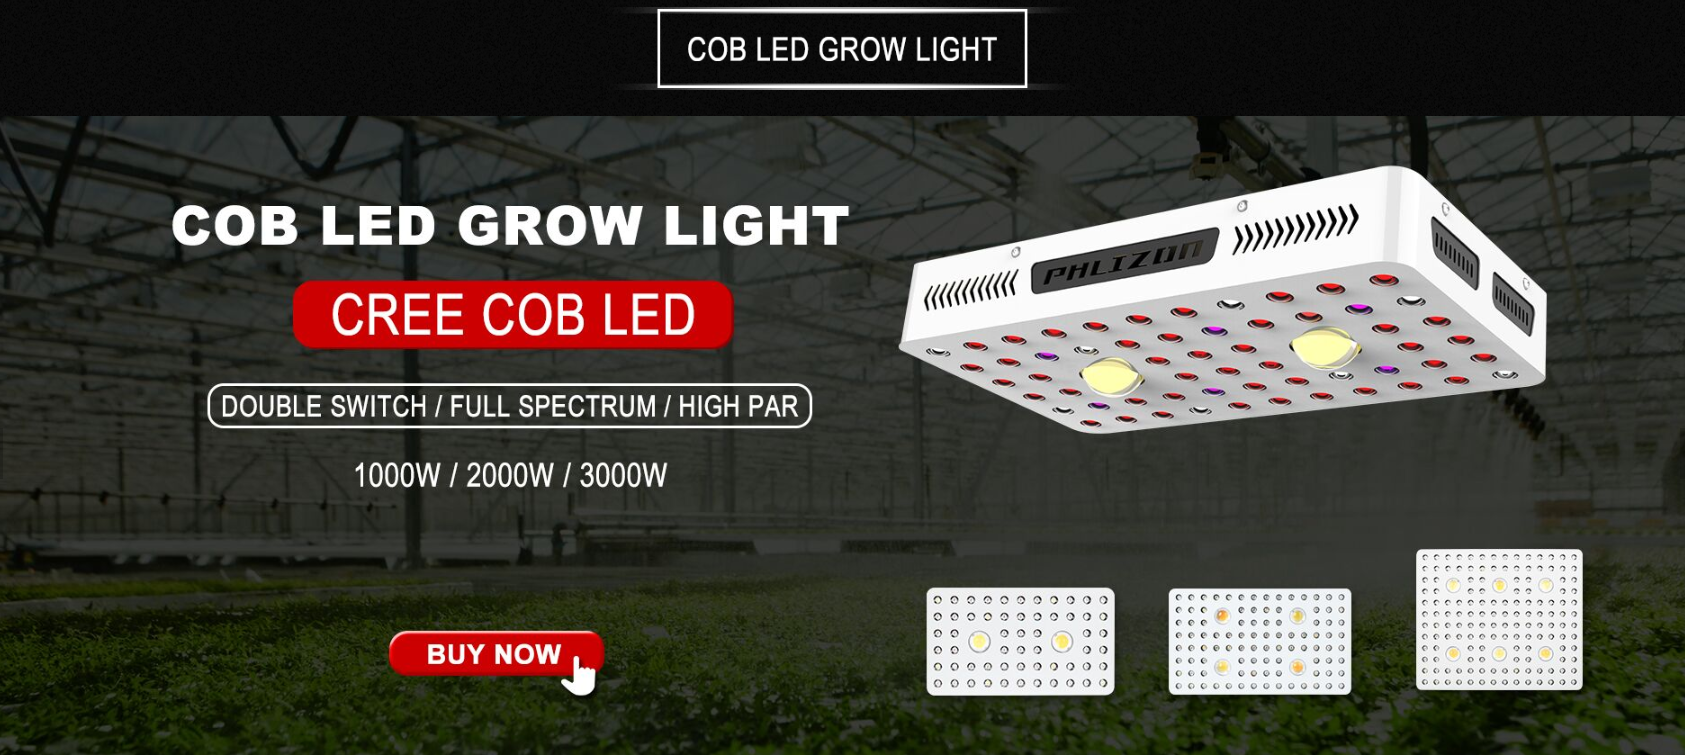 600w Cob Led Grow Light